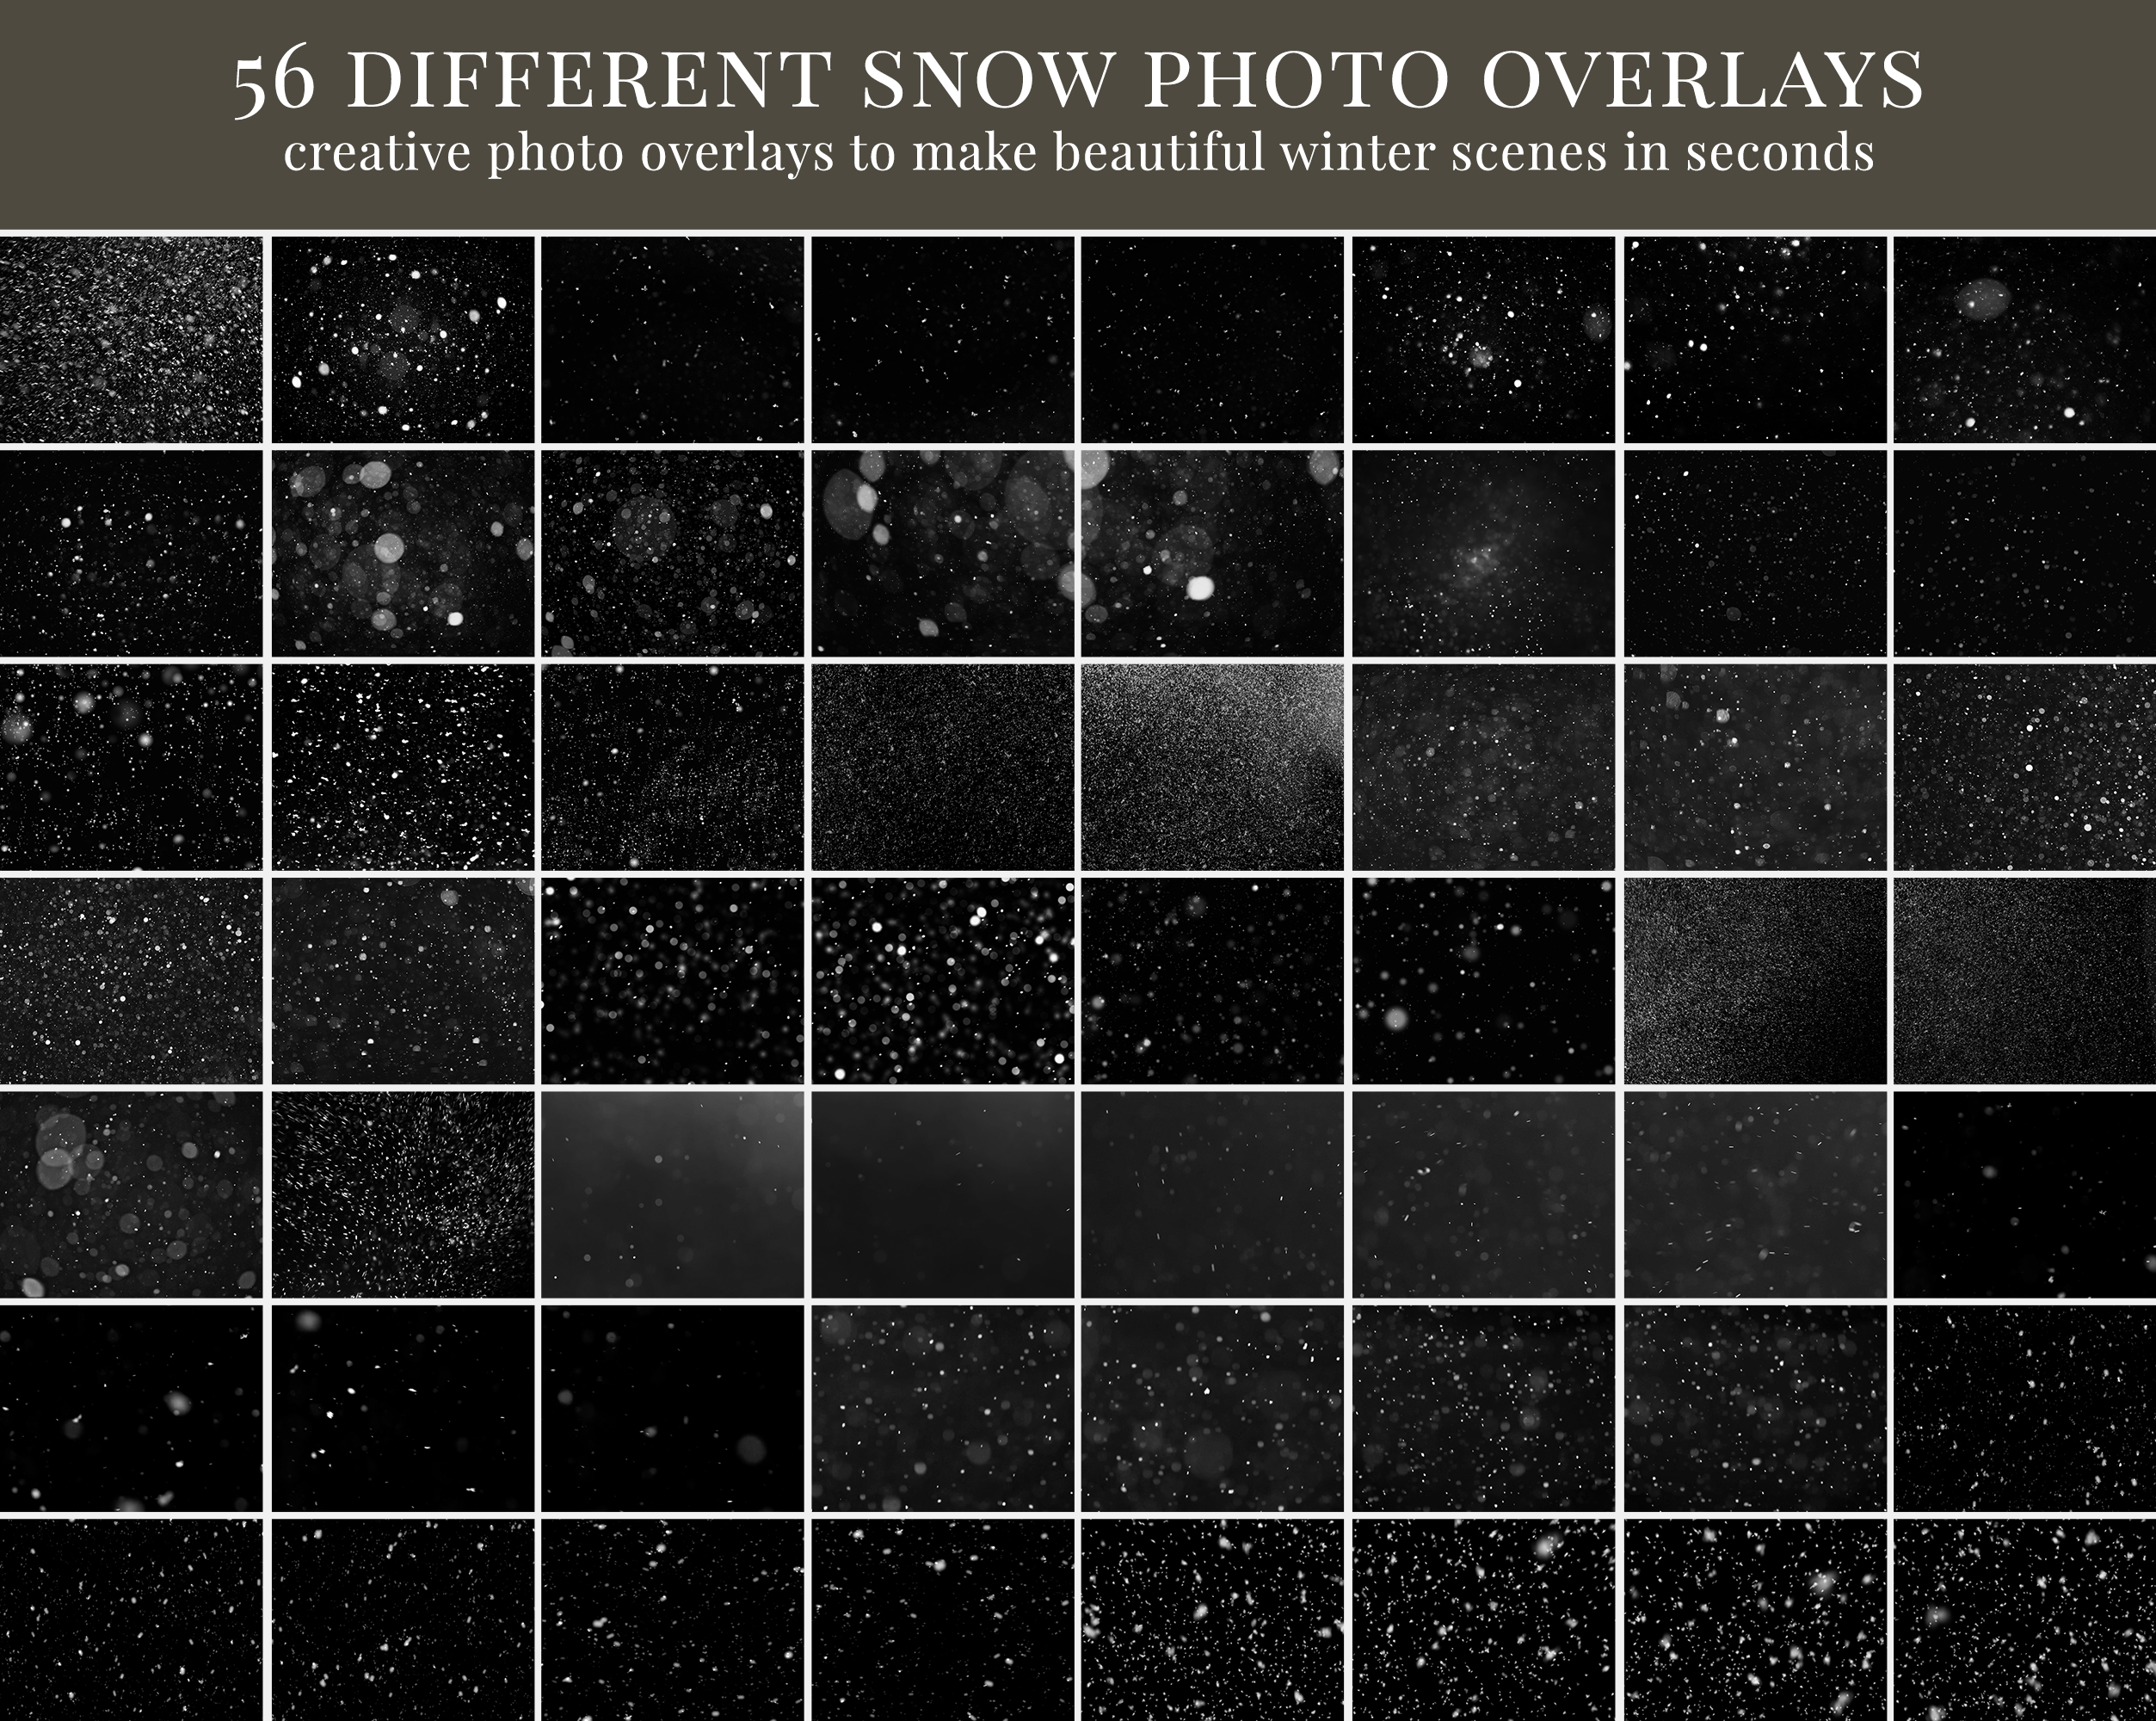 Snow photo overlays